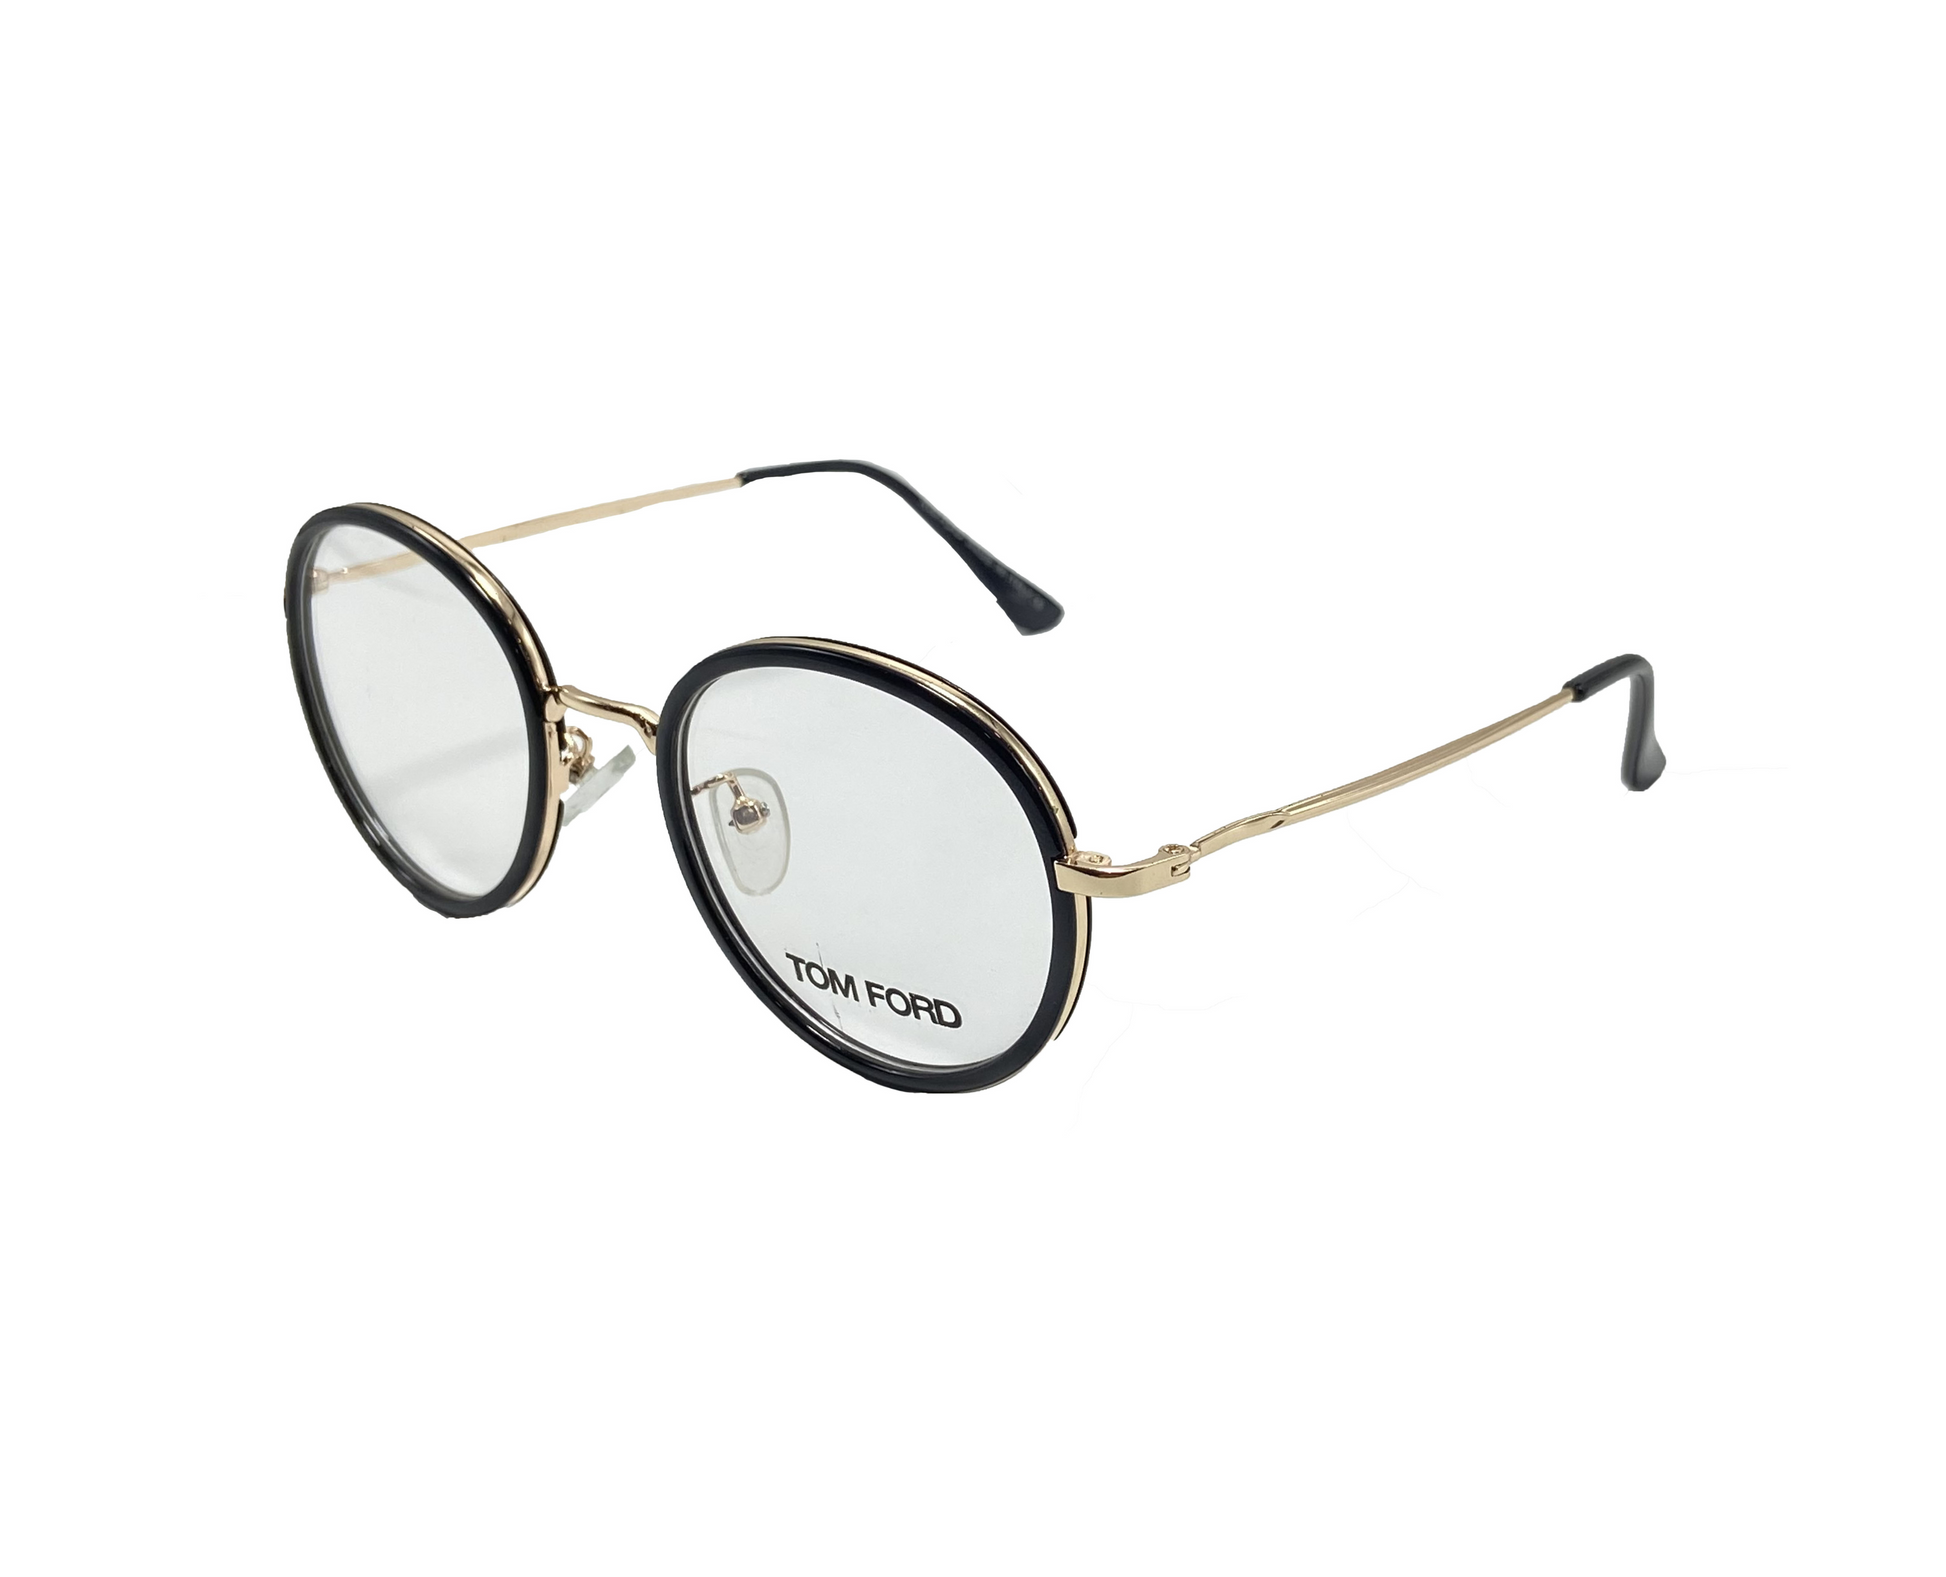 NS Classic - 2625 - Black Golden - Eyeglasses